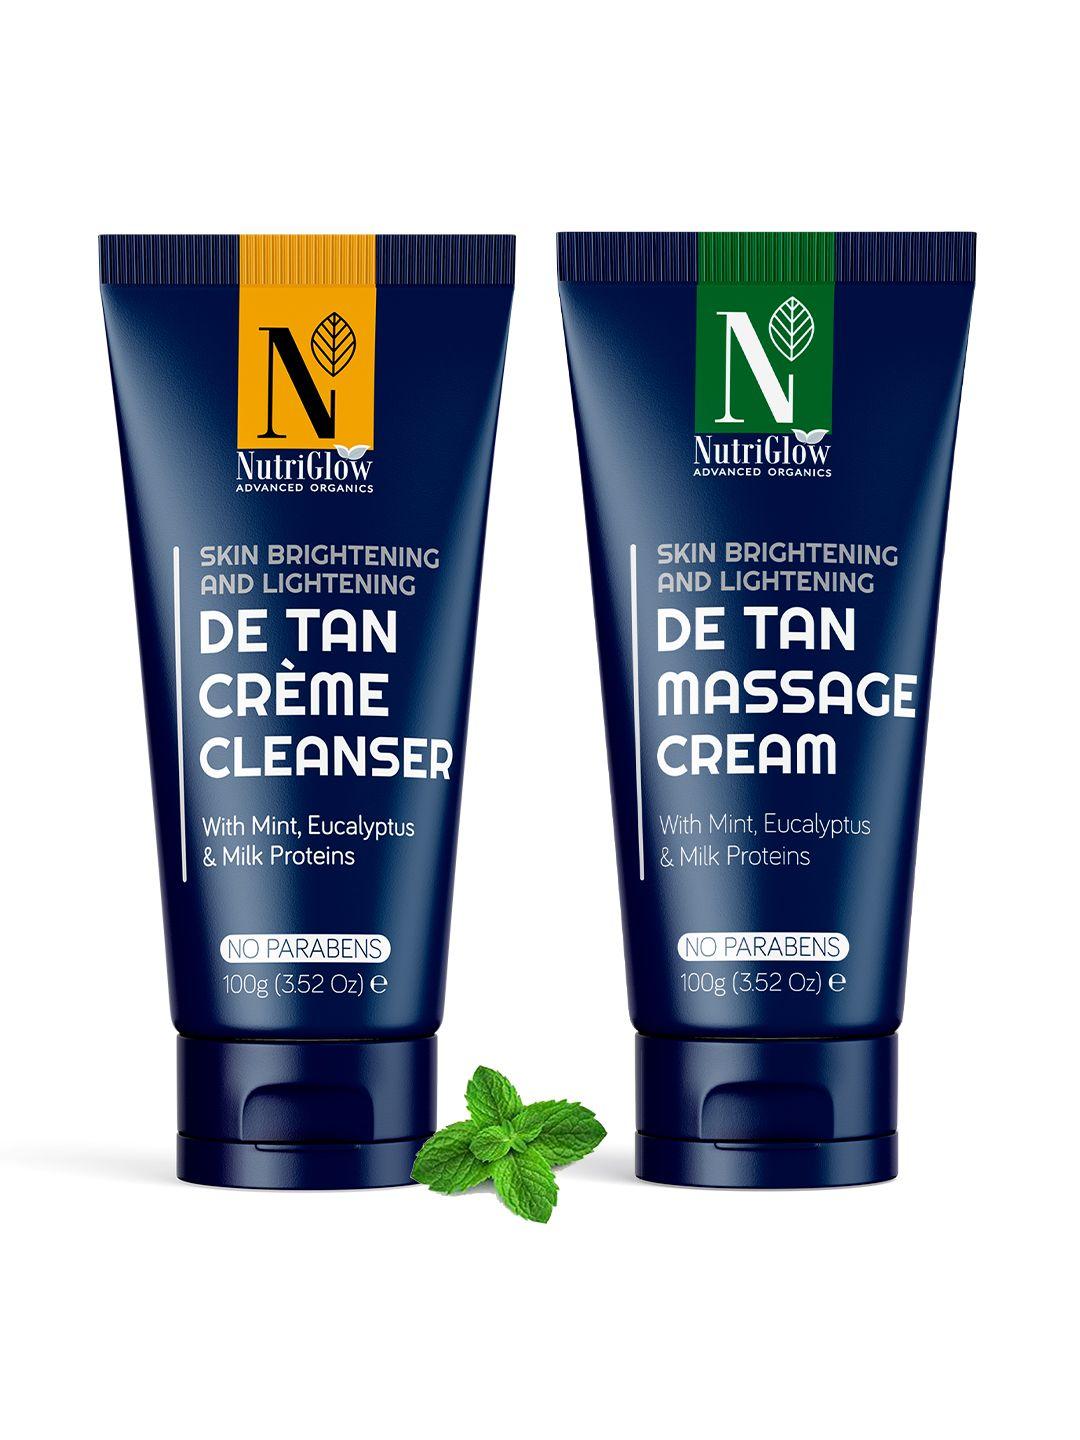 nutriglow advanced organics 2-pack sustainable de tan massage cream & cleanser,100g each